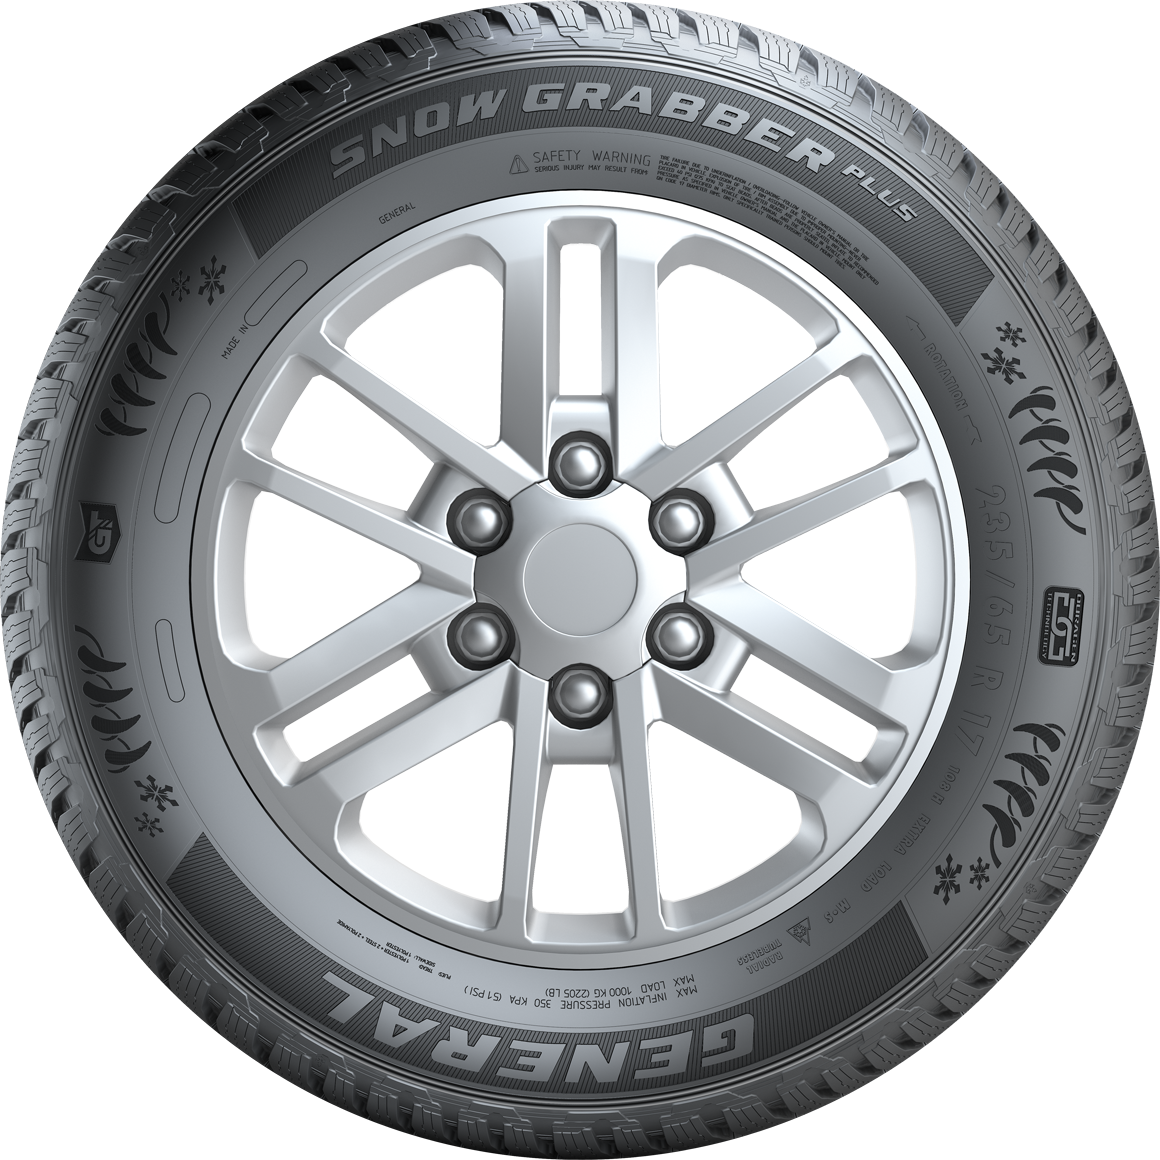 General Tire Snow Grabber Plus 235/60R17 106H XL - KolayOto